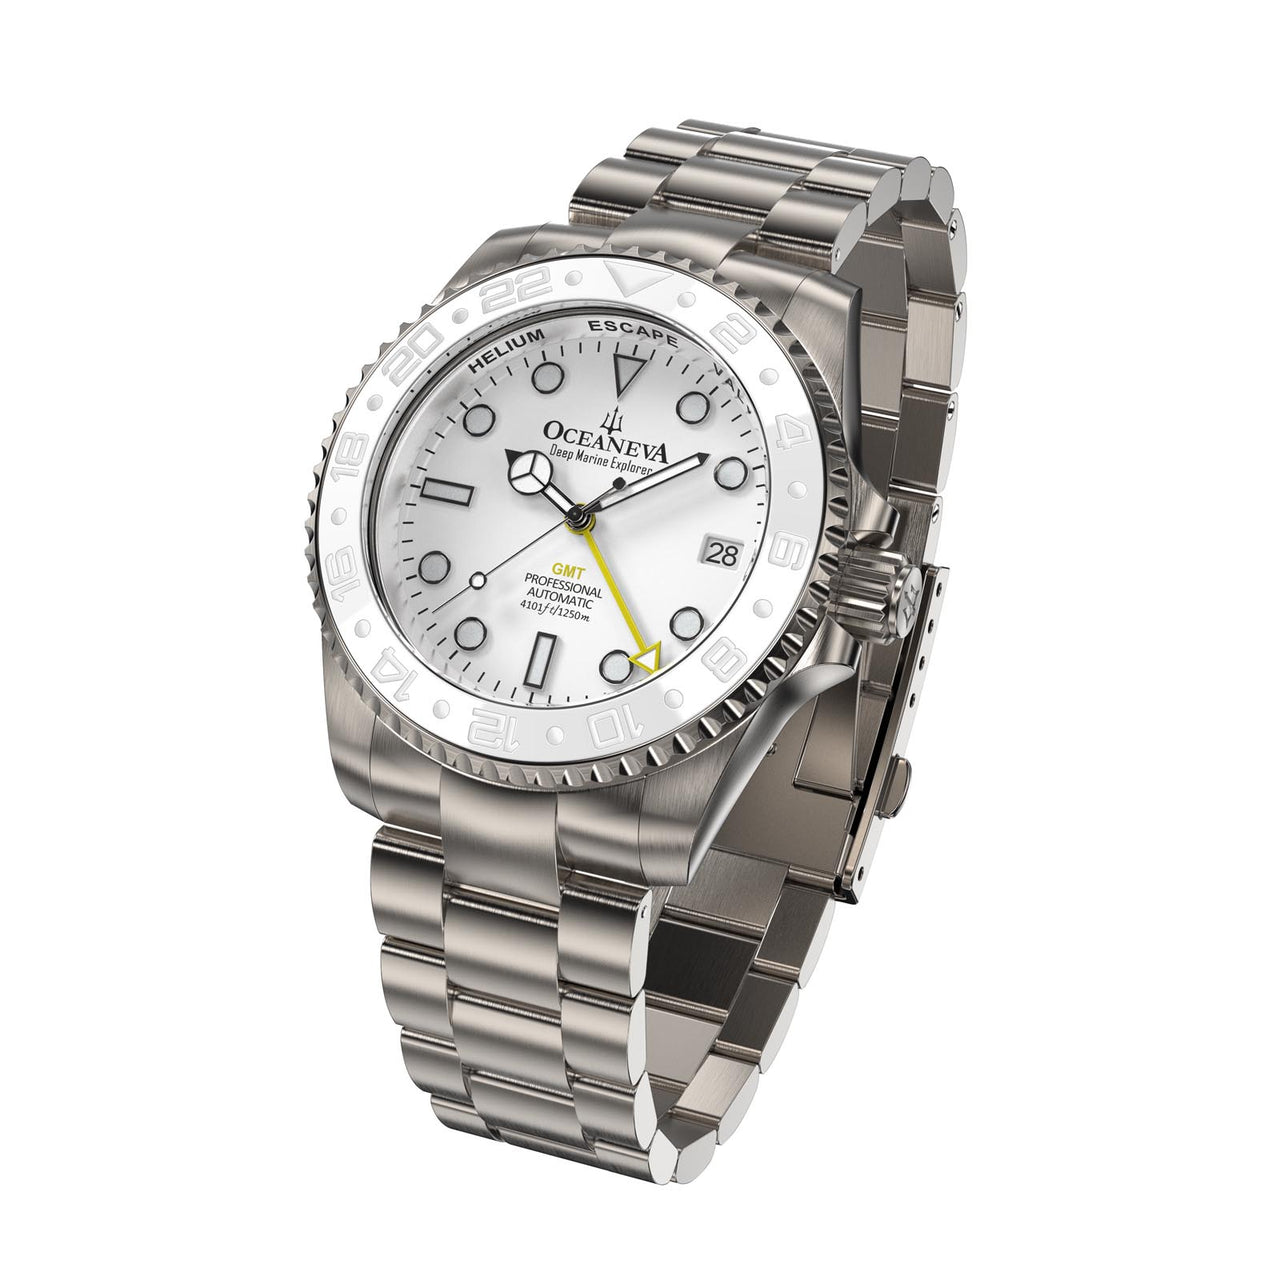 Oceaneva Titanium GMT Automatic Watch: The ultimate diver’s companion